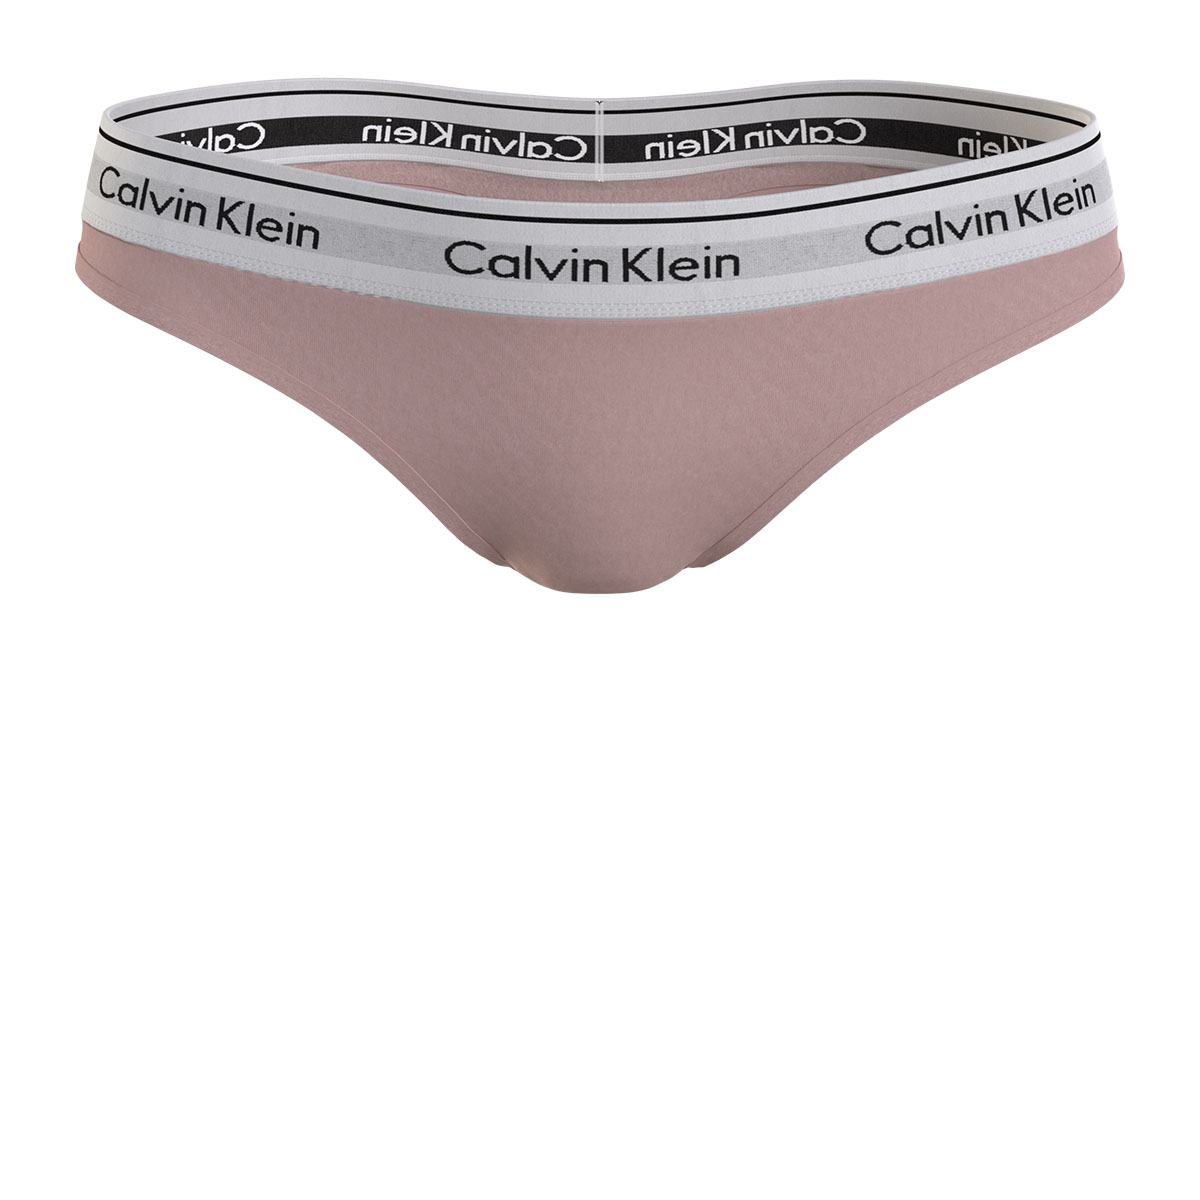 CALVIN KLEIN Modern Cotton Thong - Teal